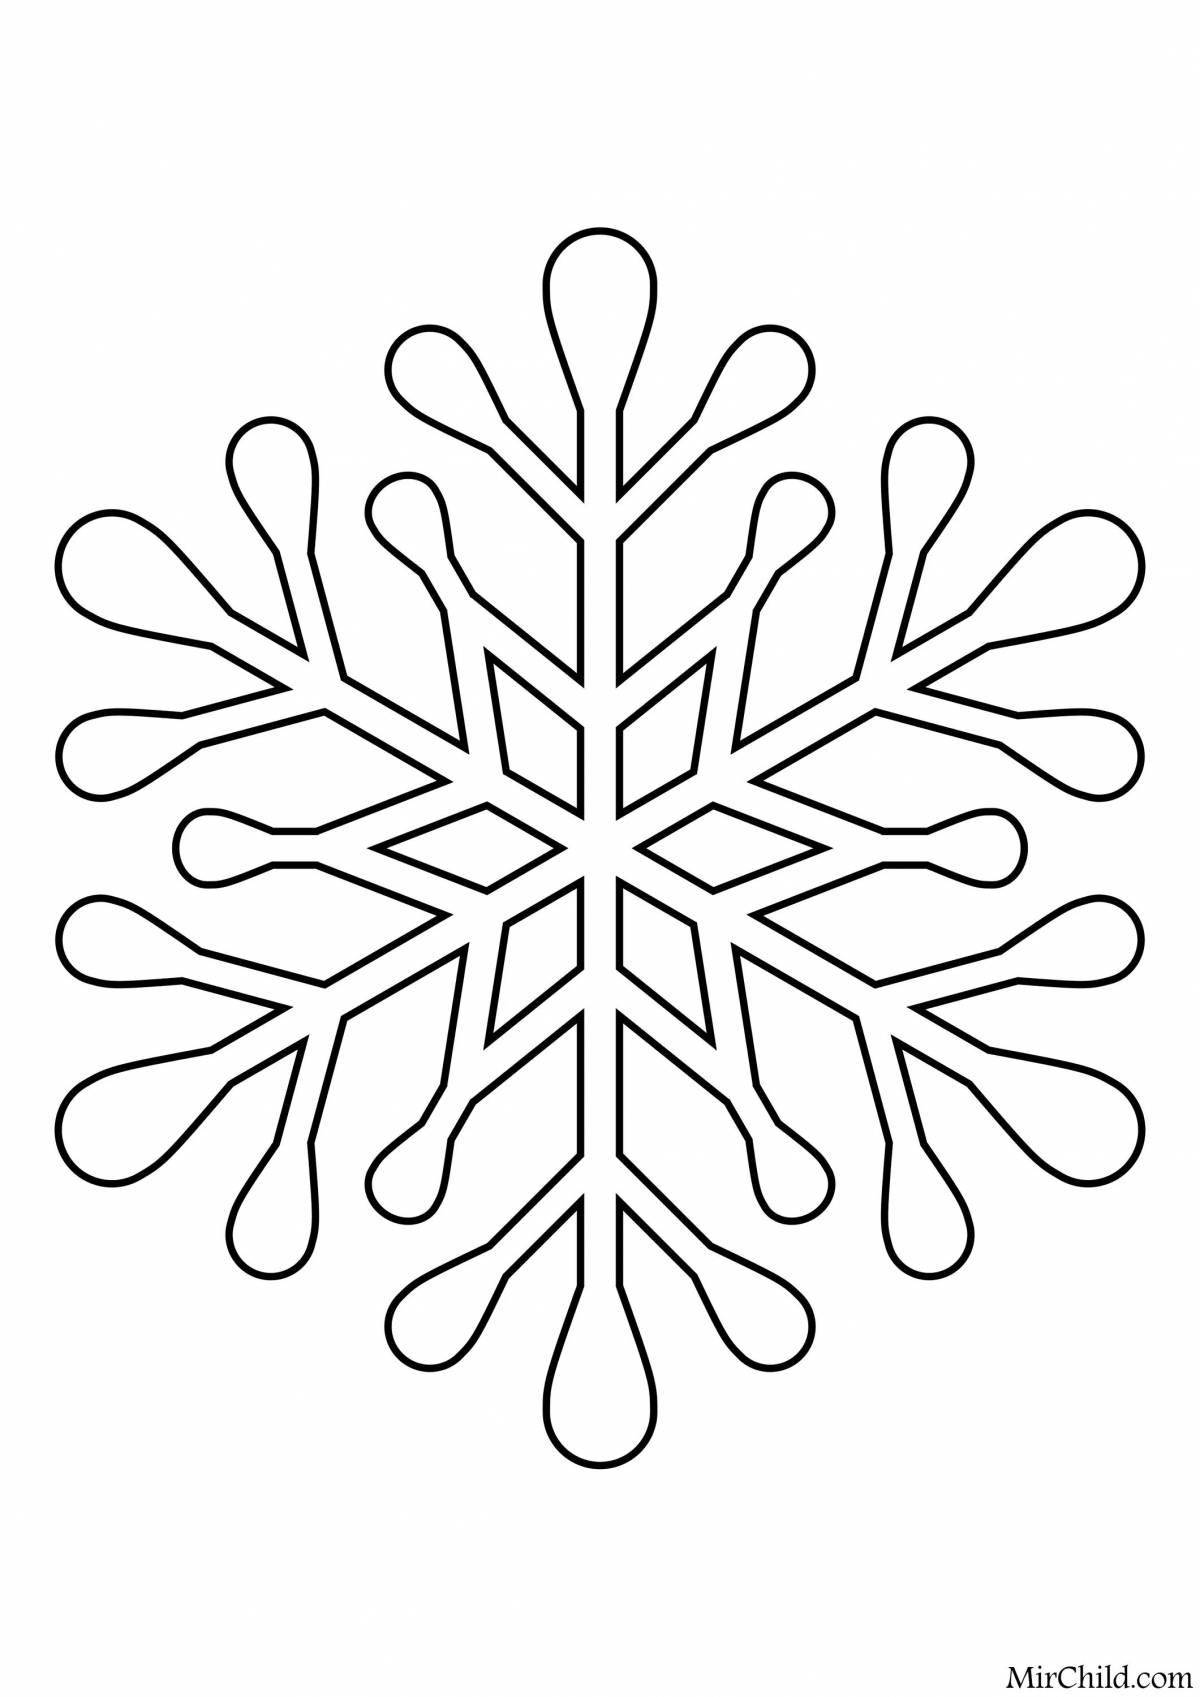 Coloring page wonderful snowflake pattern